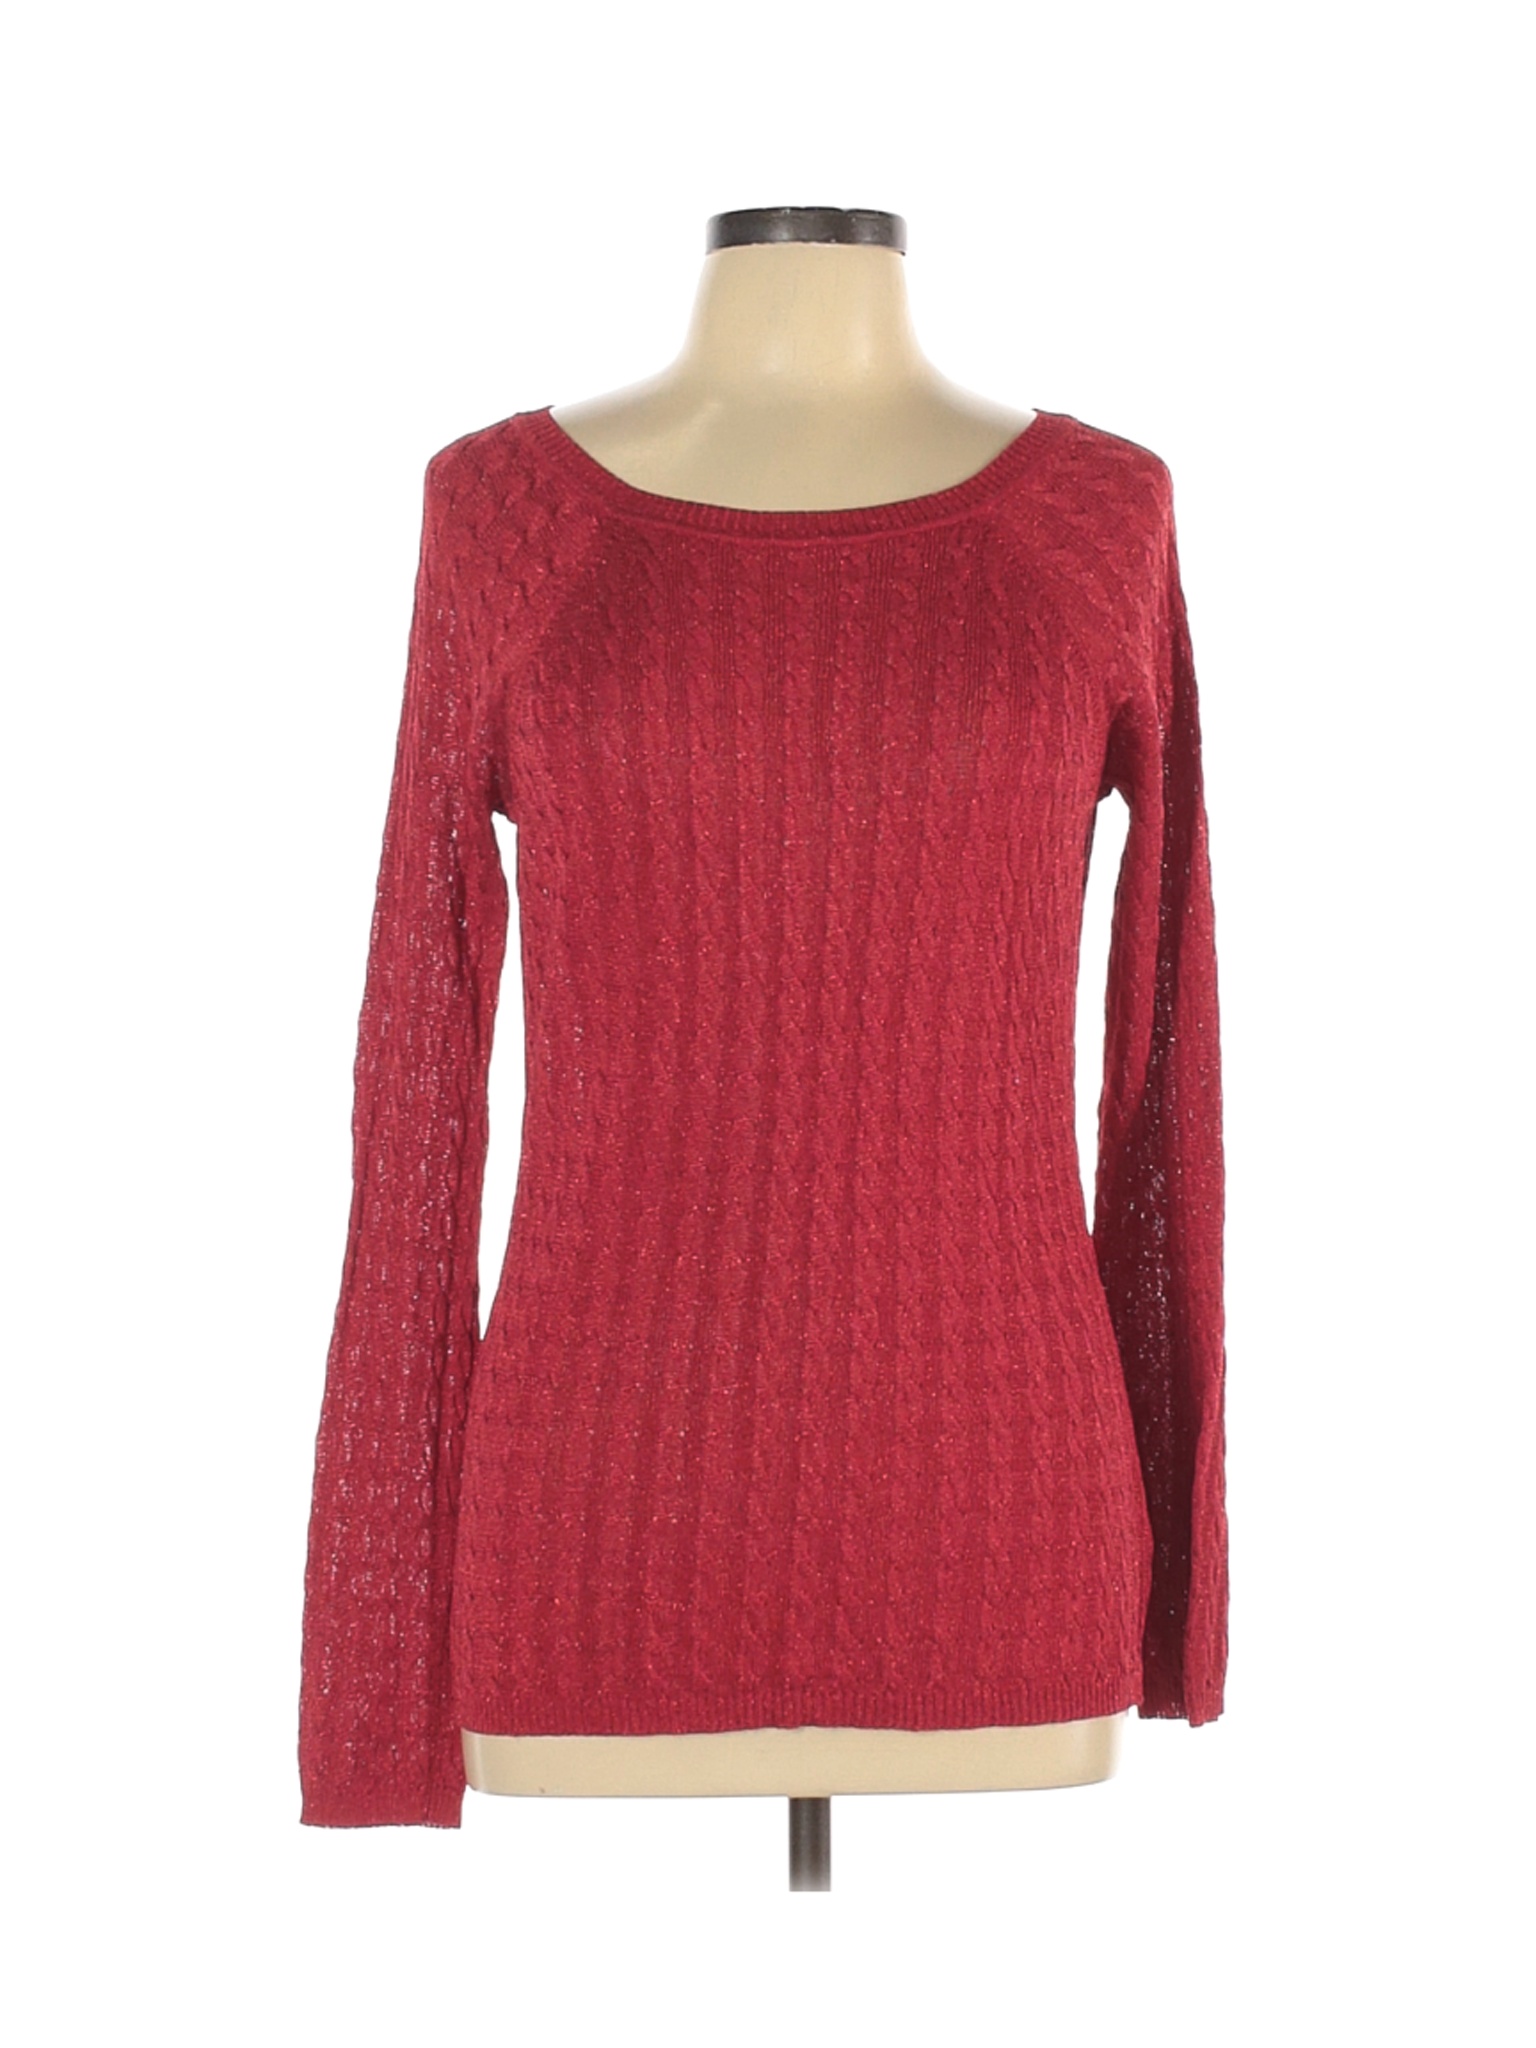 Jones New York Signature Women Red Pullover Sweater L | eBay